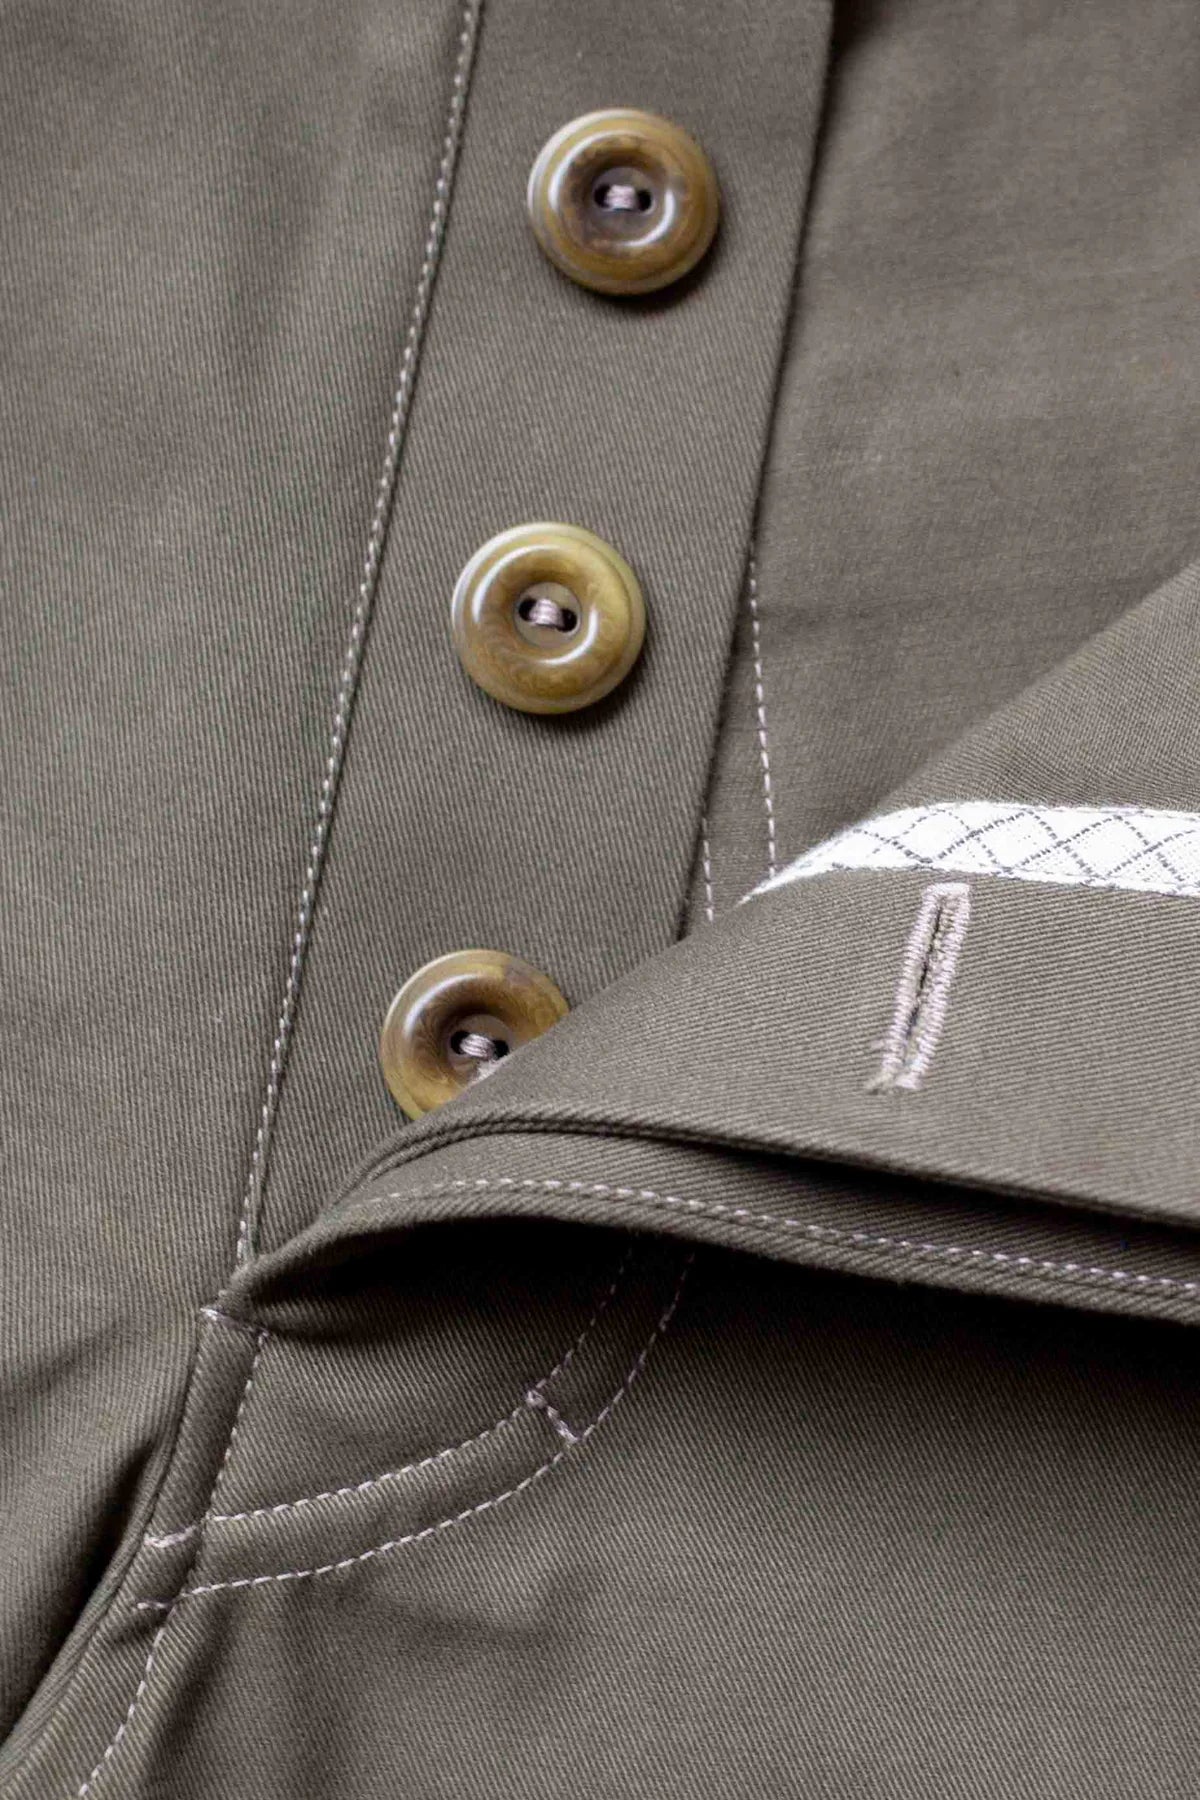 The Modern Sewing Co. Men's Worker Trousers - PDF Pattern